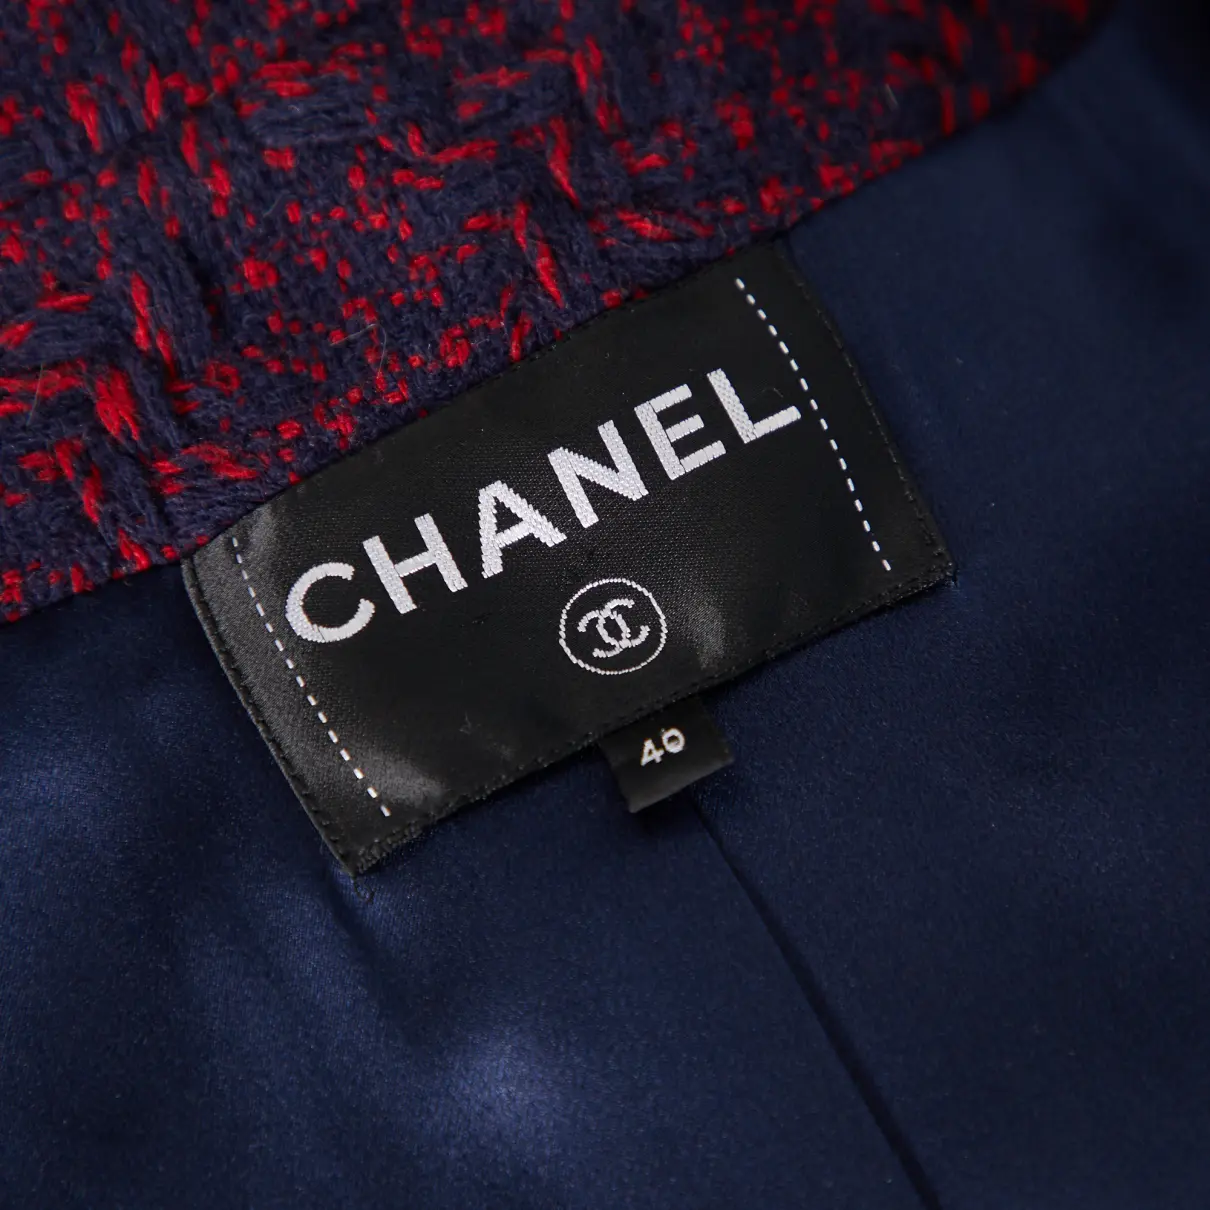 Wool coat Chanel